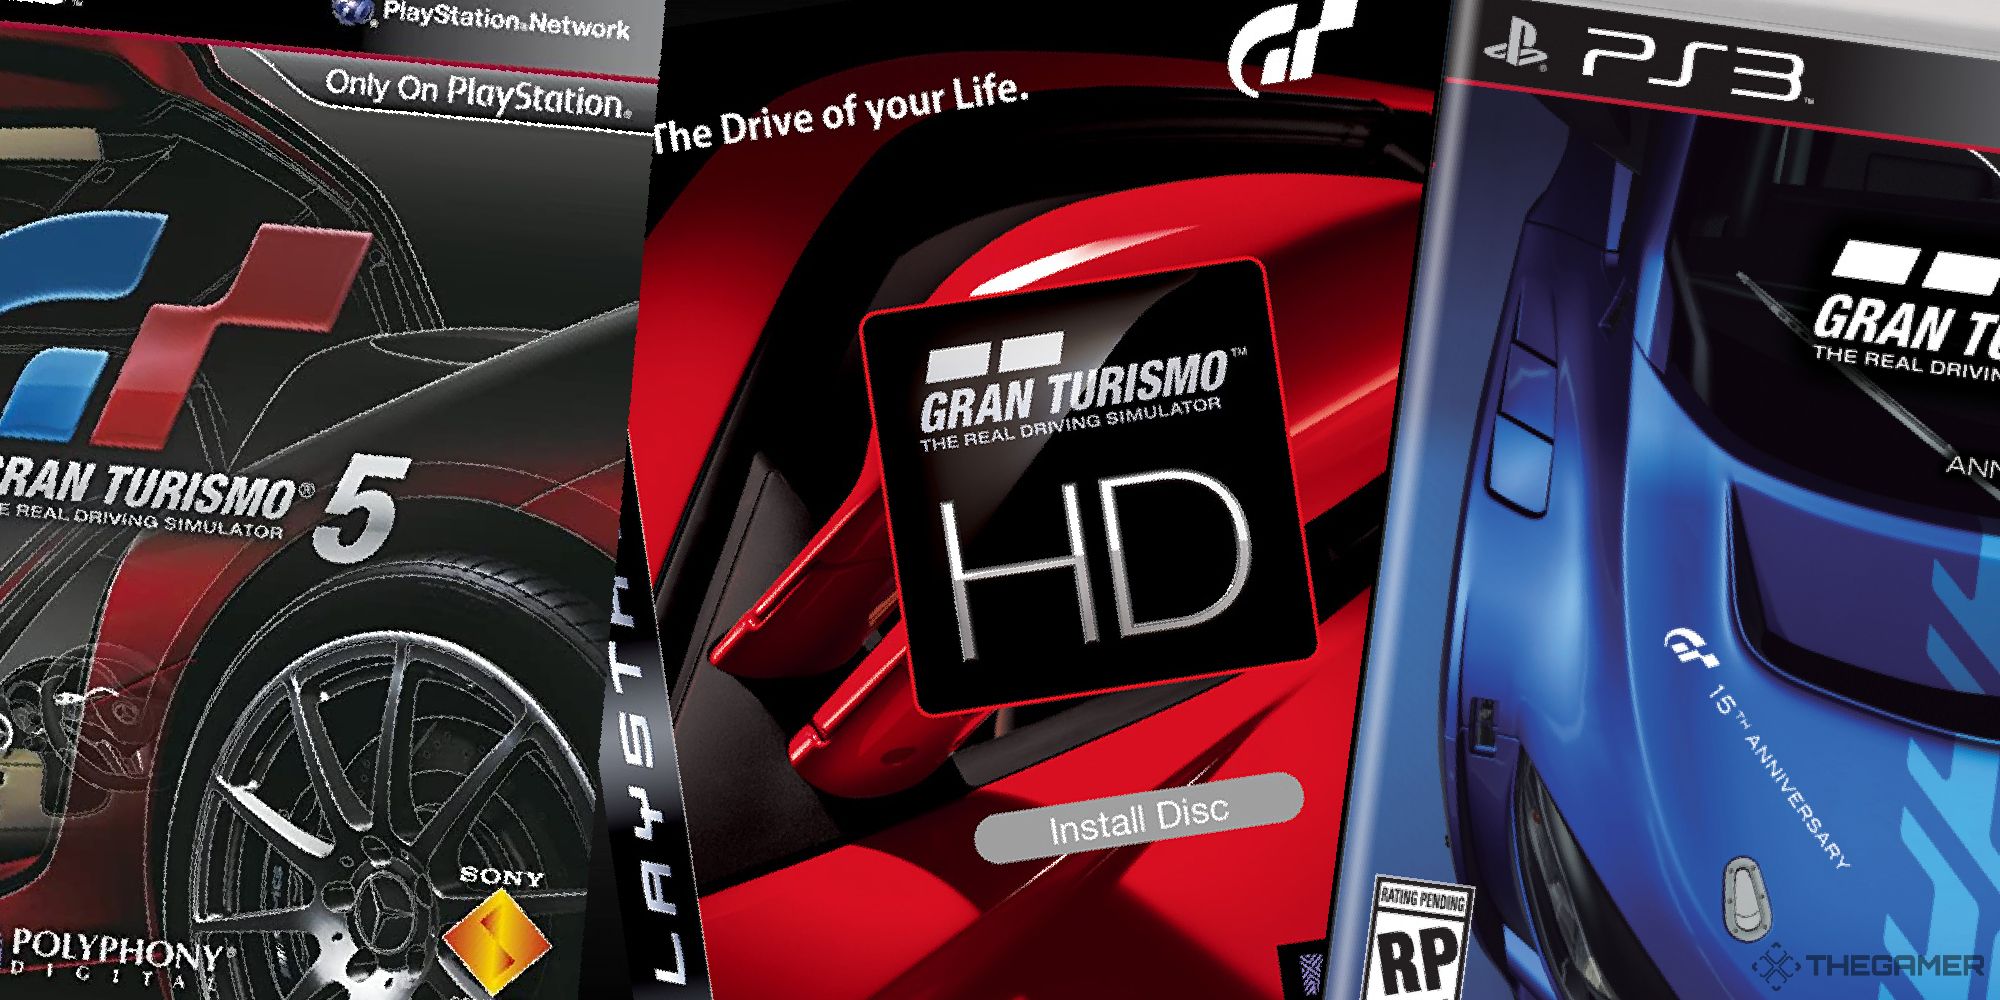 Game Review: Gran Turismo HD (PS3)